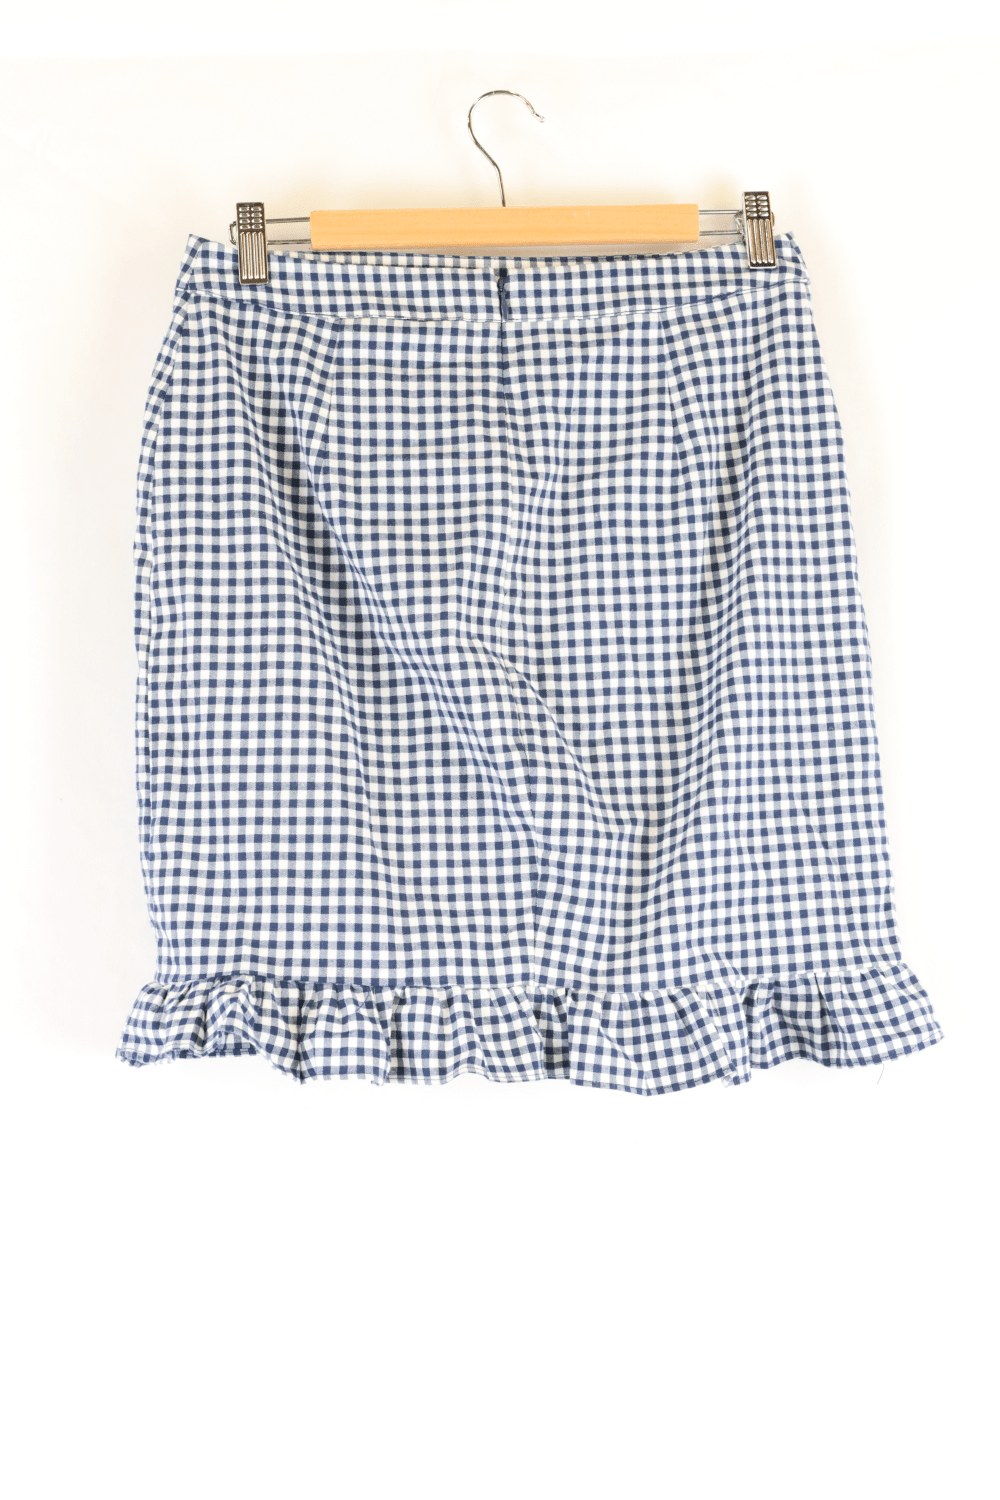 Tokito Blue And White Skirt 10